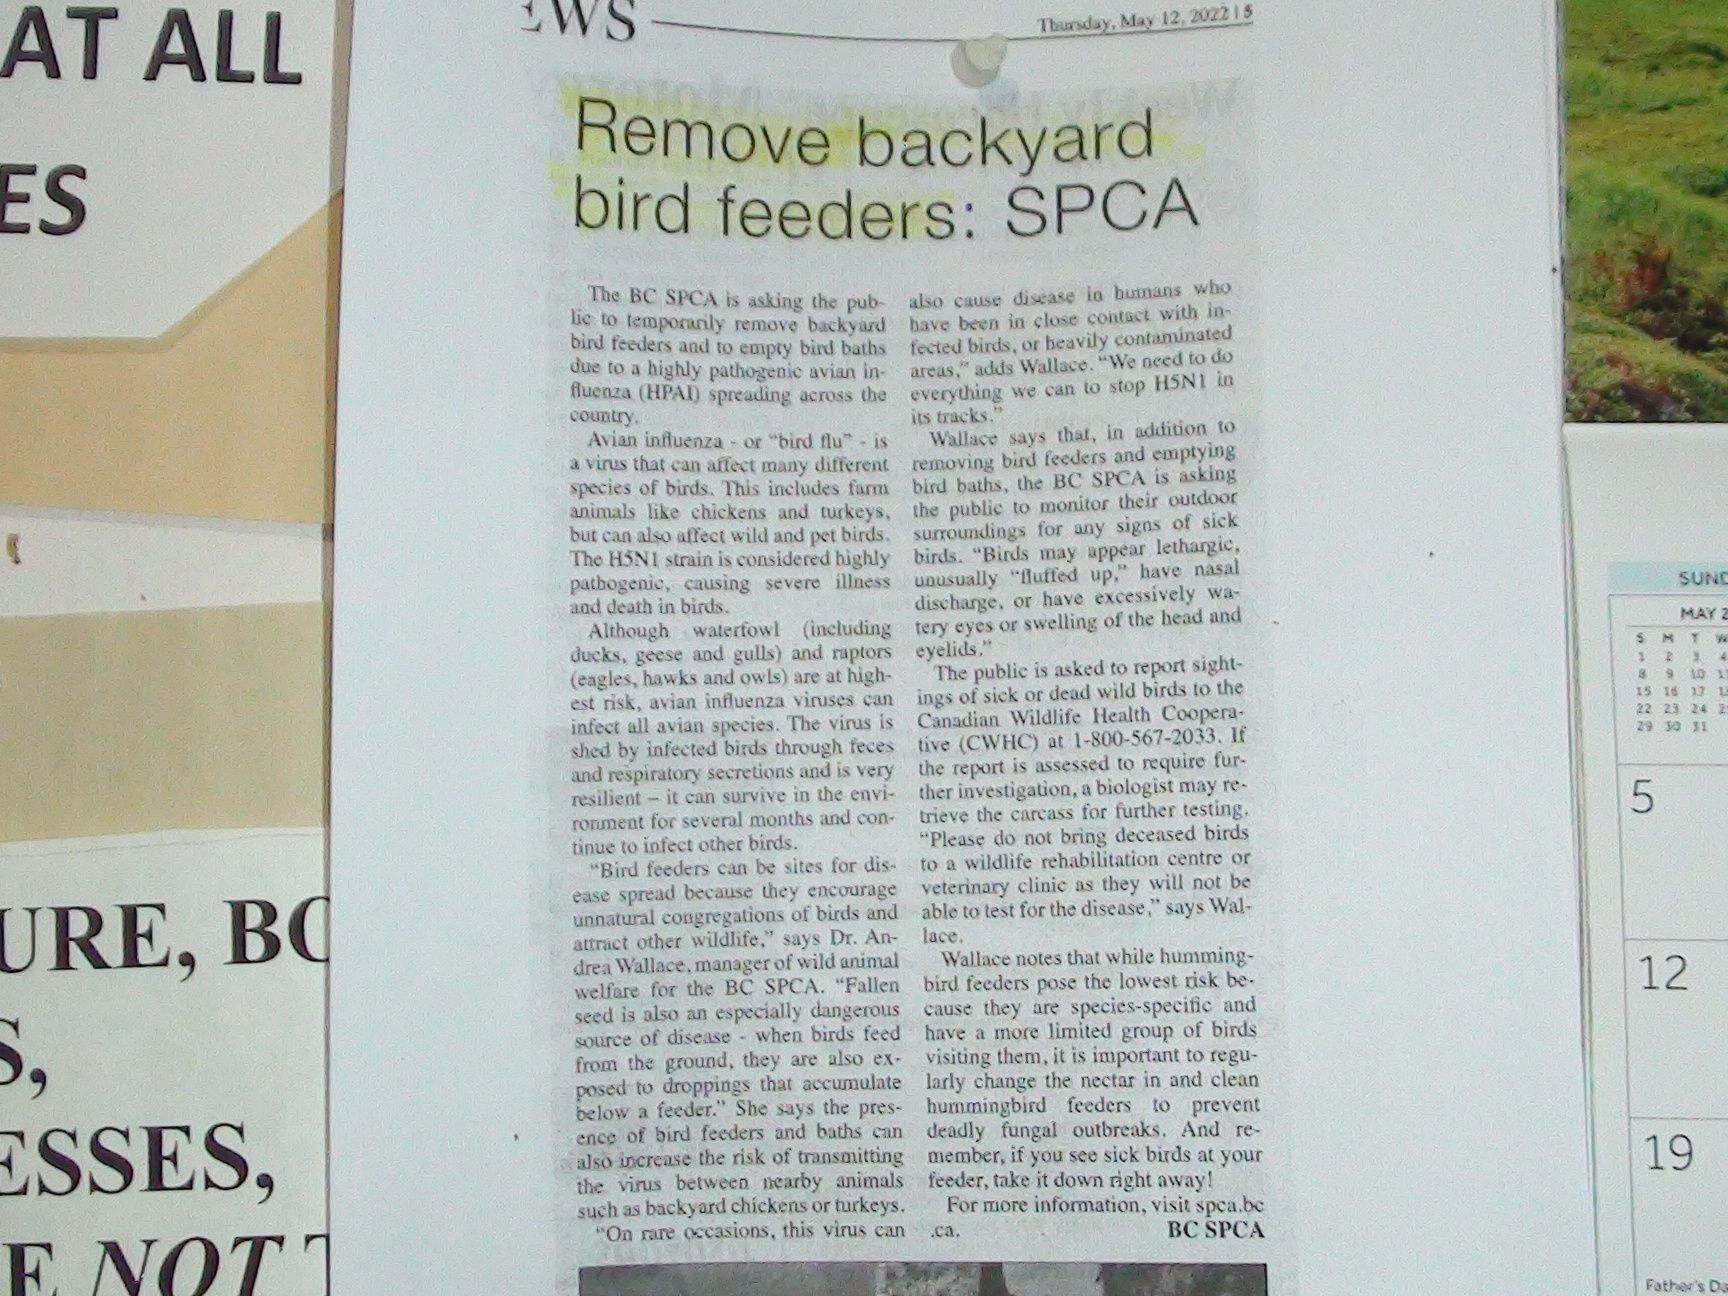 spca says remove outdoor bird feeders whatever double whatever DSC01770.JPG